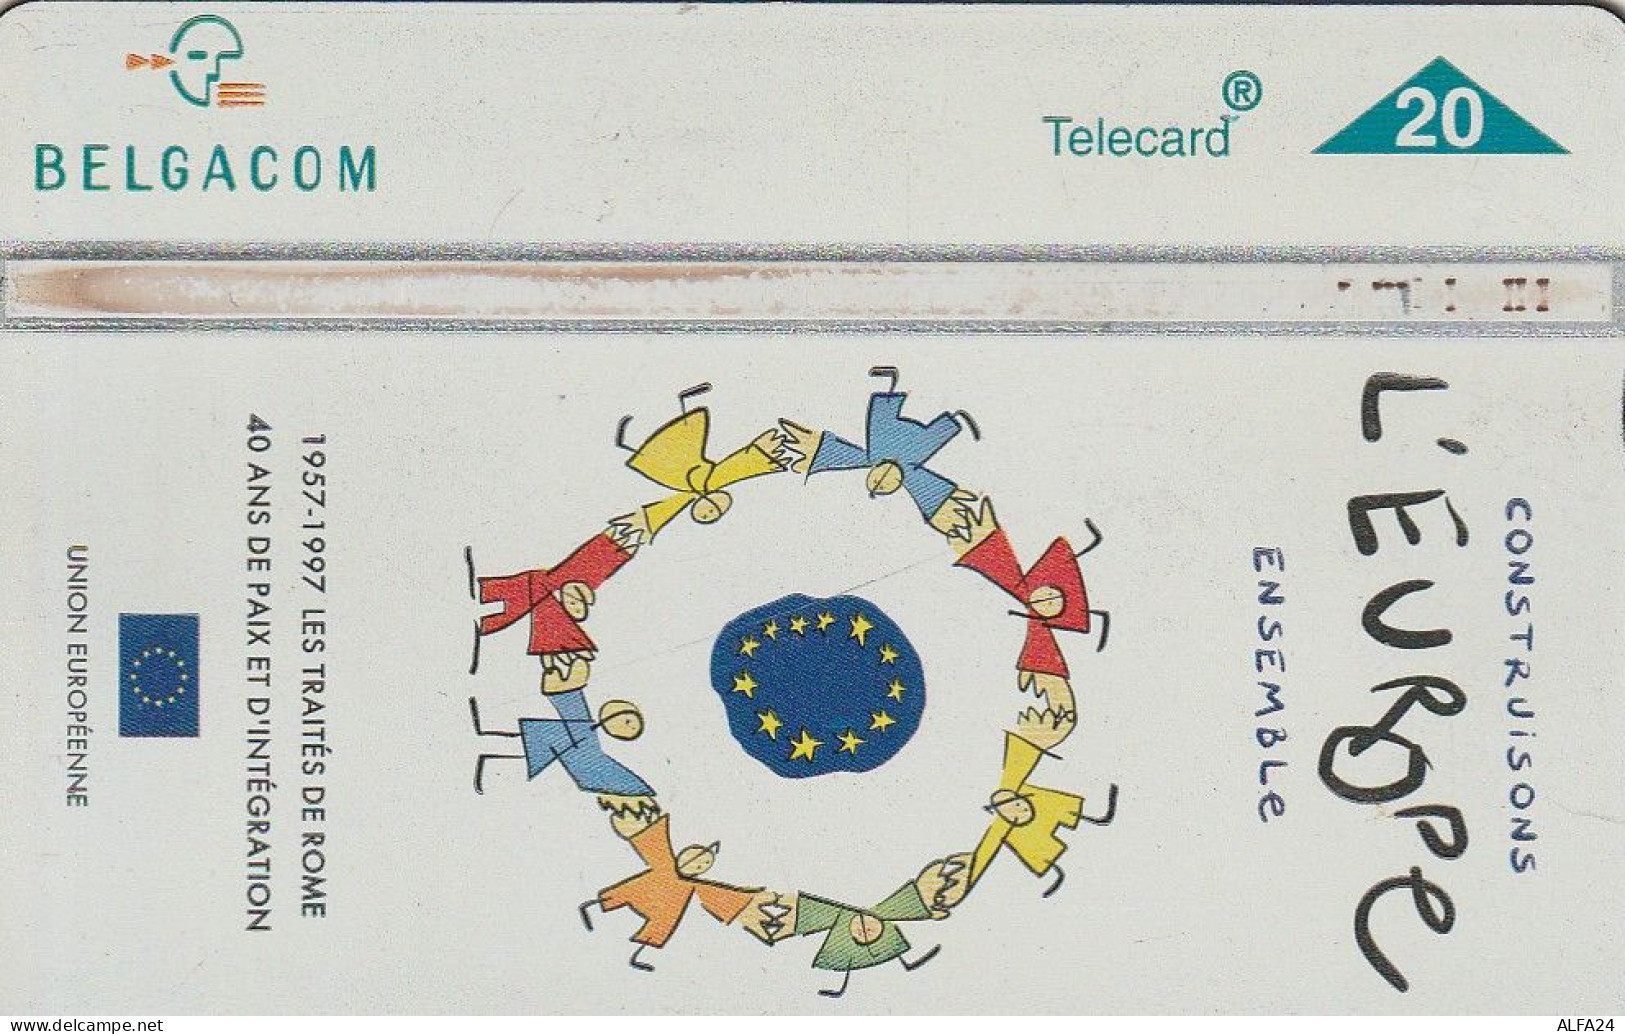 PHONE CARD BELGIO LG (CV6635 - Senza Chip